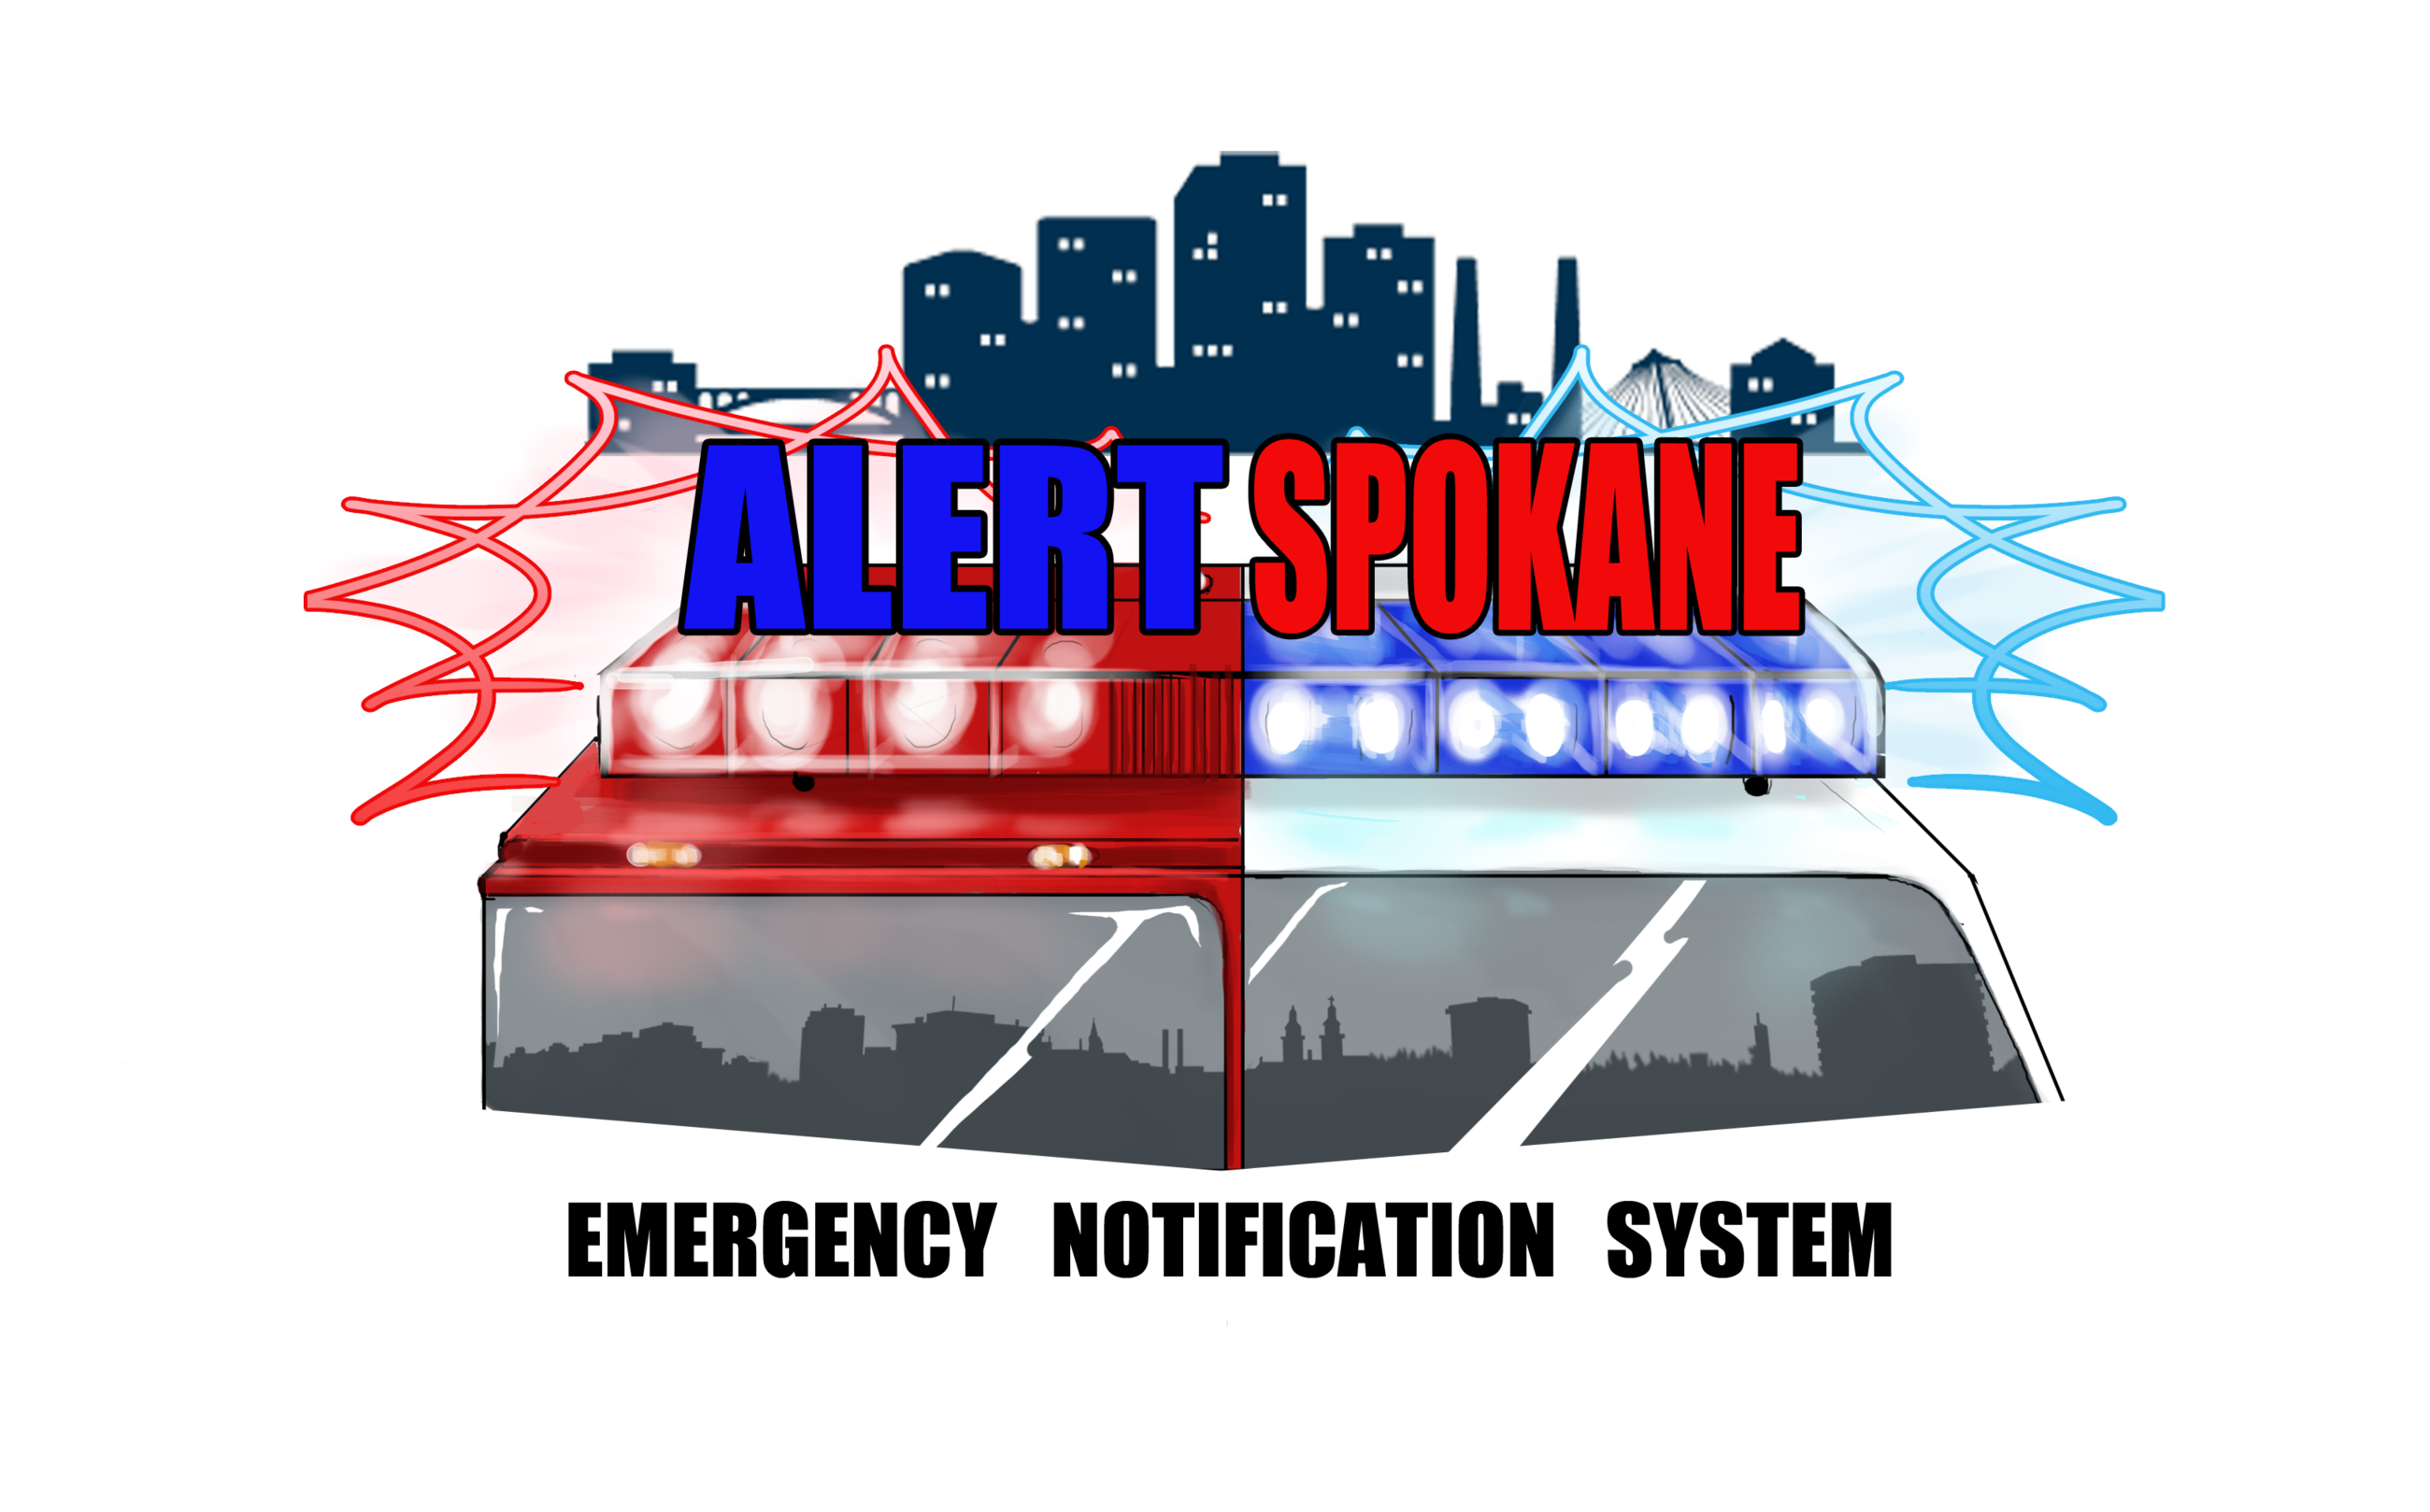 Alert Spokane image